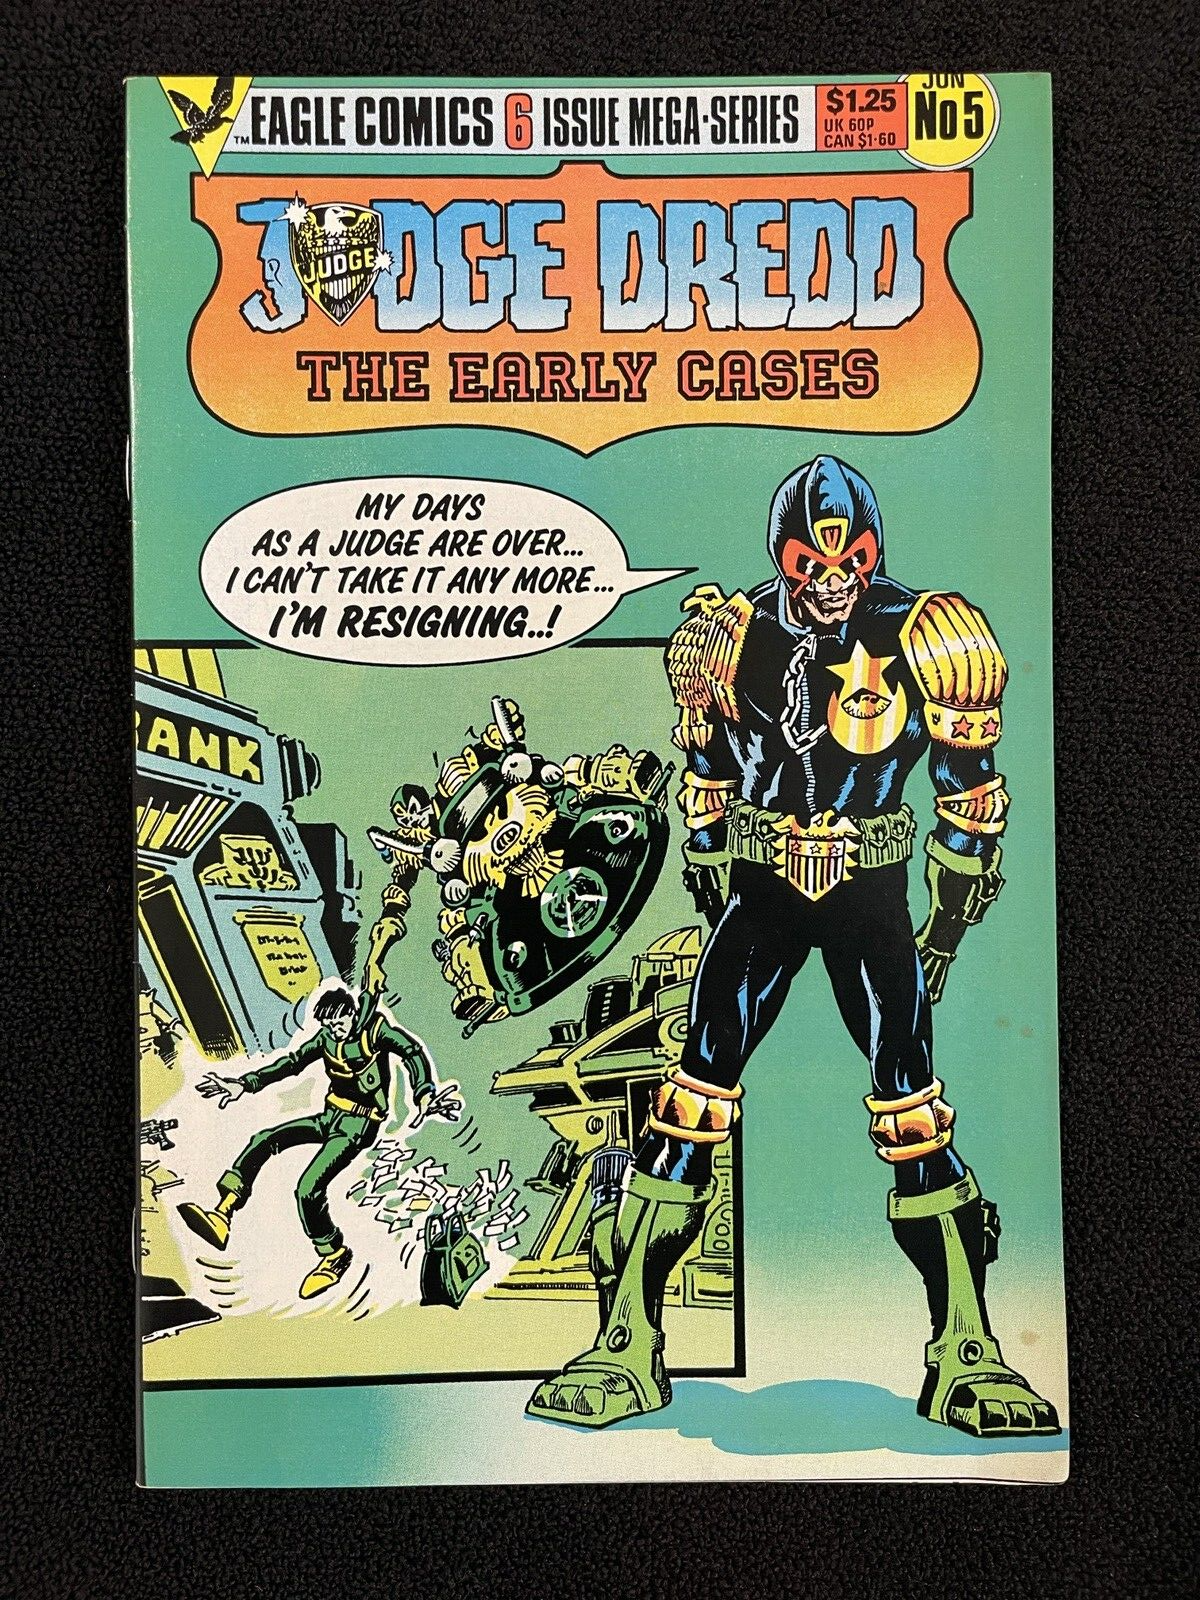 Judge Dredd: The Early Cases #1, 2, 4, 5, 6 (Eagle Comics, 1986) Lot of 5 Books! Без бренда - фотография #5